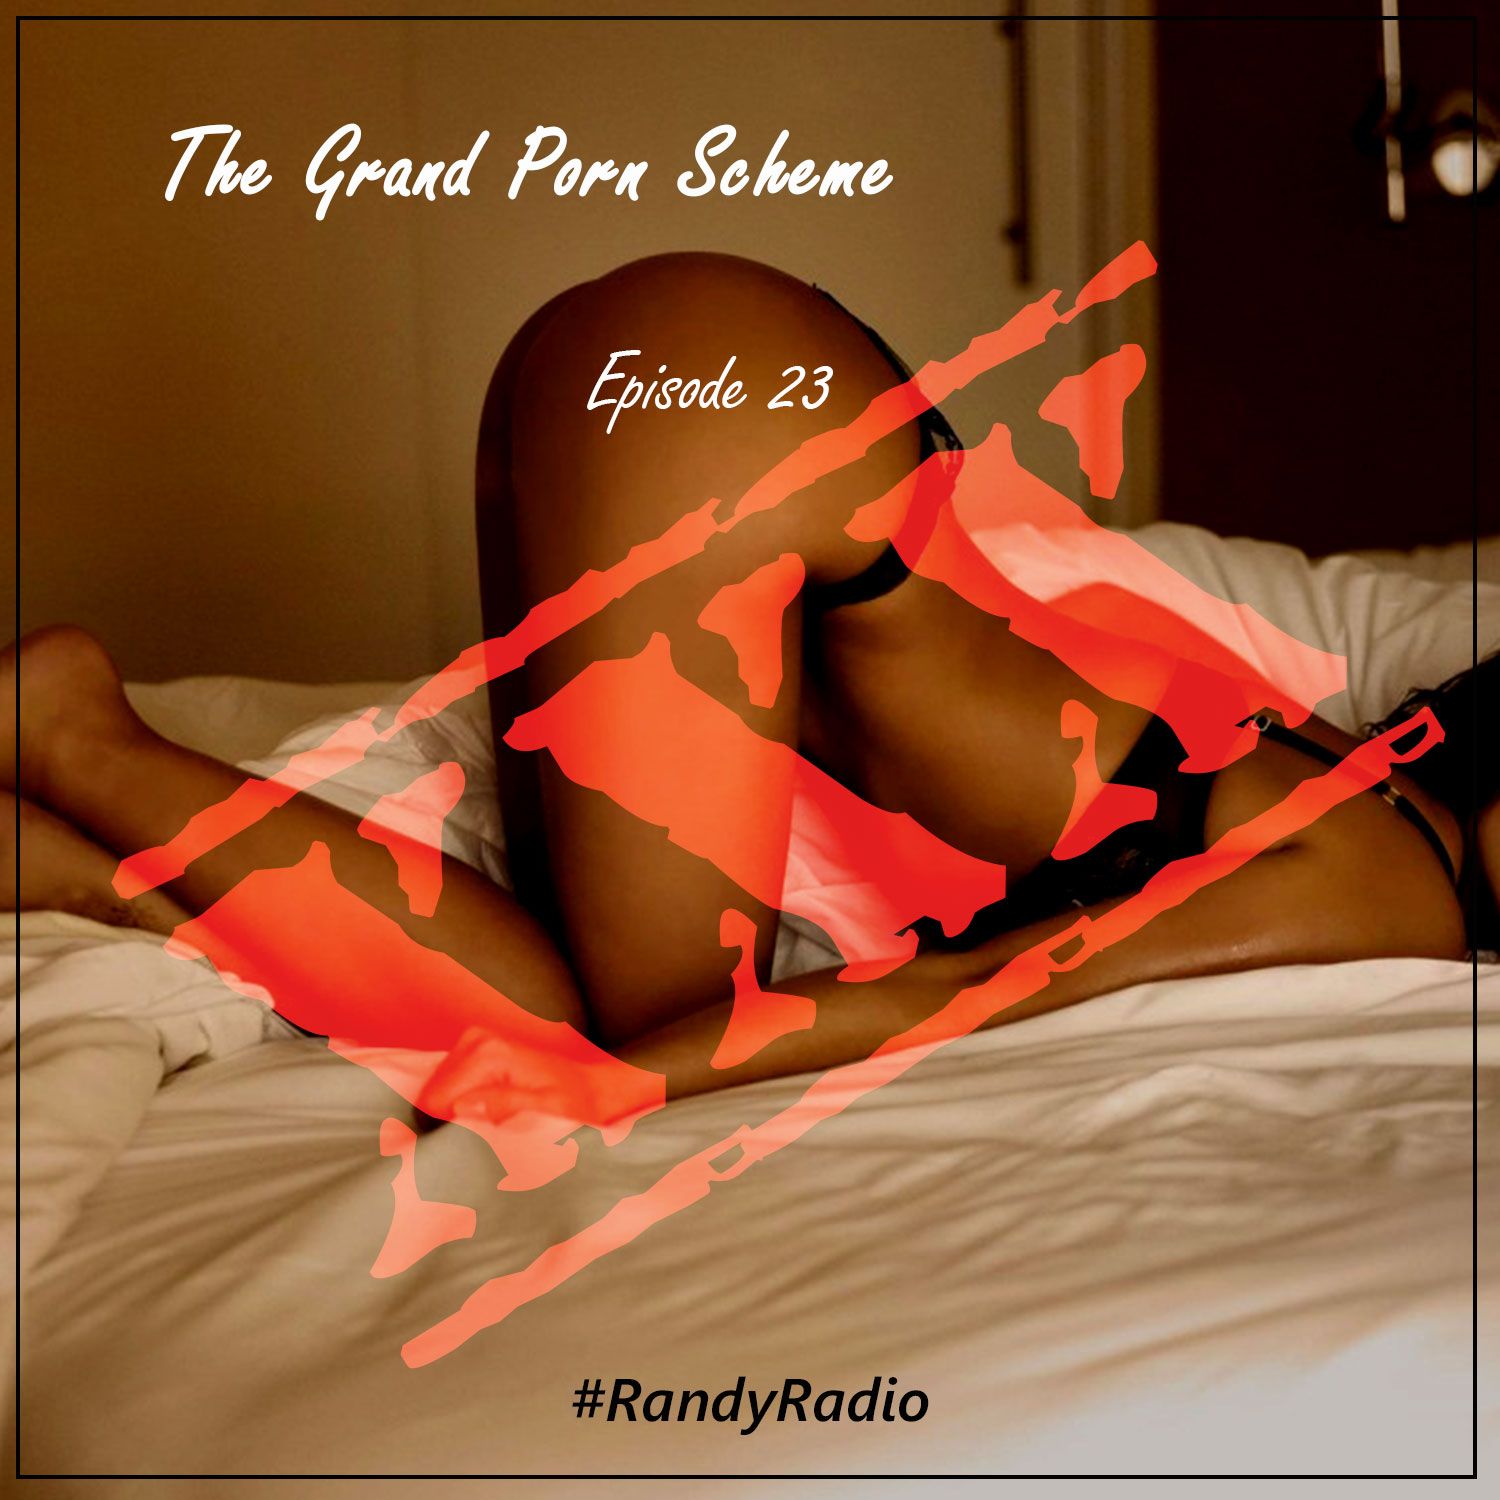 Randy Radio - [Episode 23] - The Grand Porn Scheme with Fridah